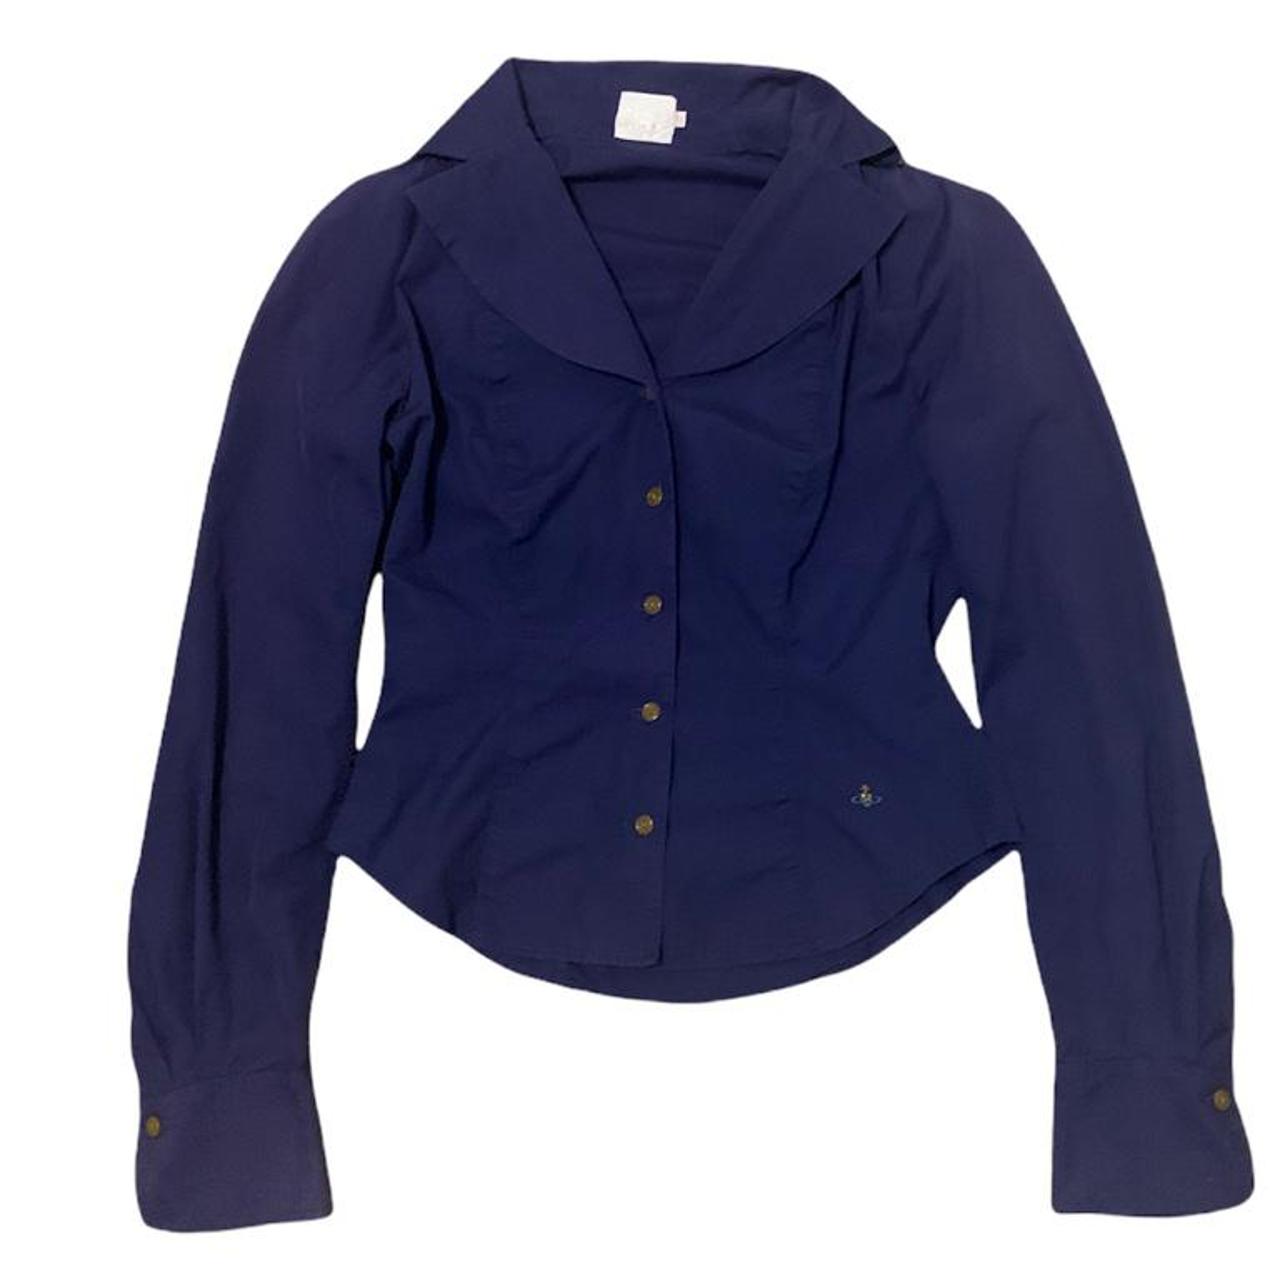 Product Image 1 - Vivienne Westwood Navy Blue Blazer

Size